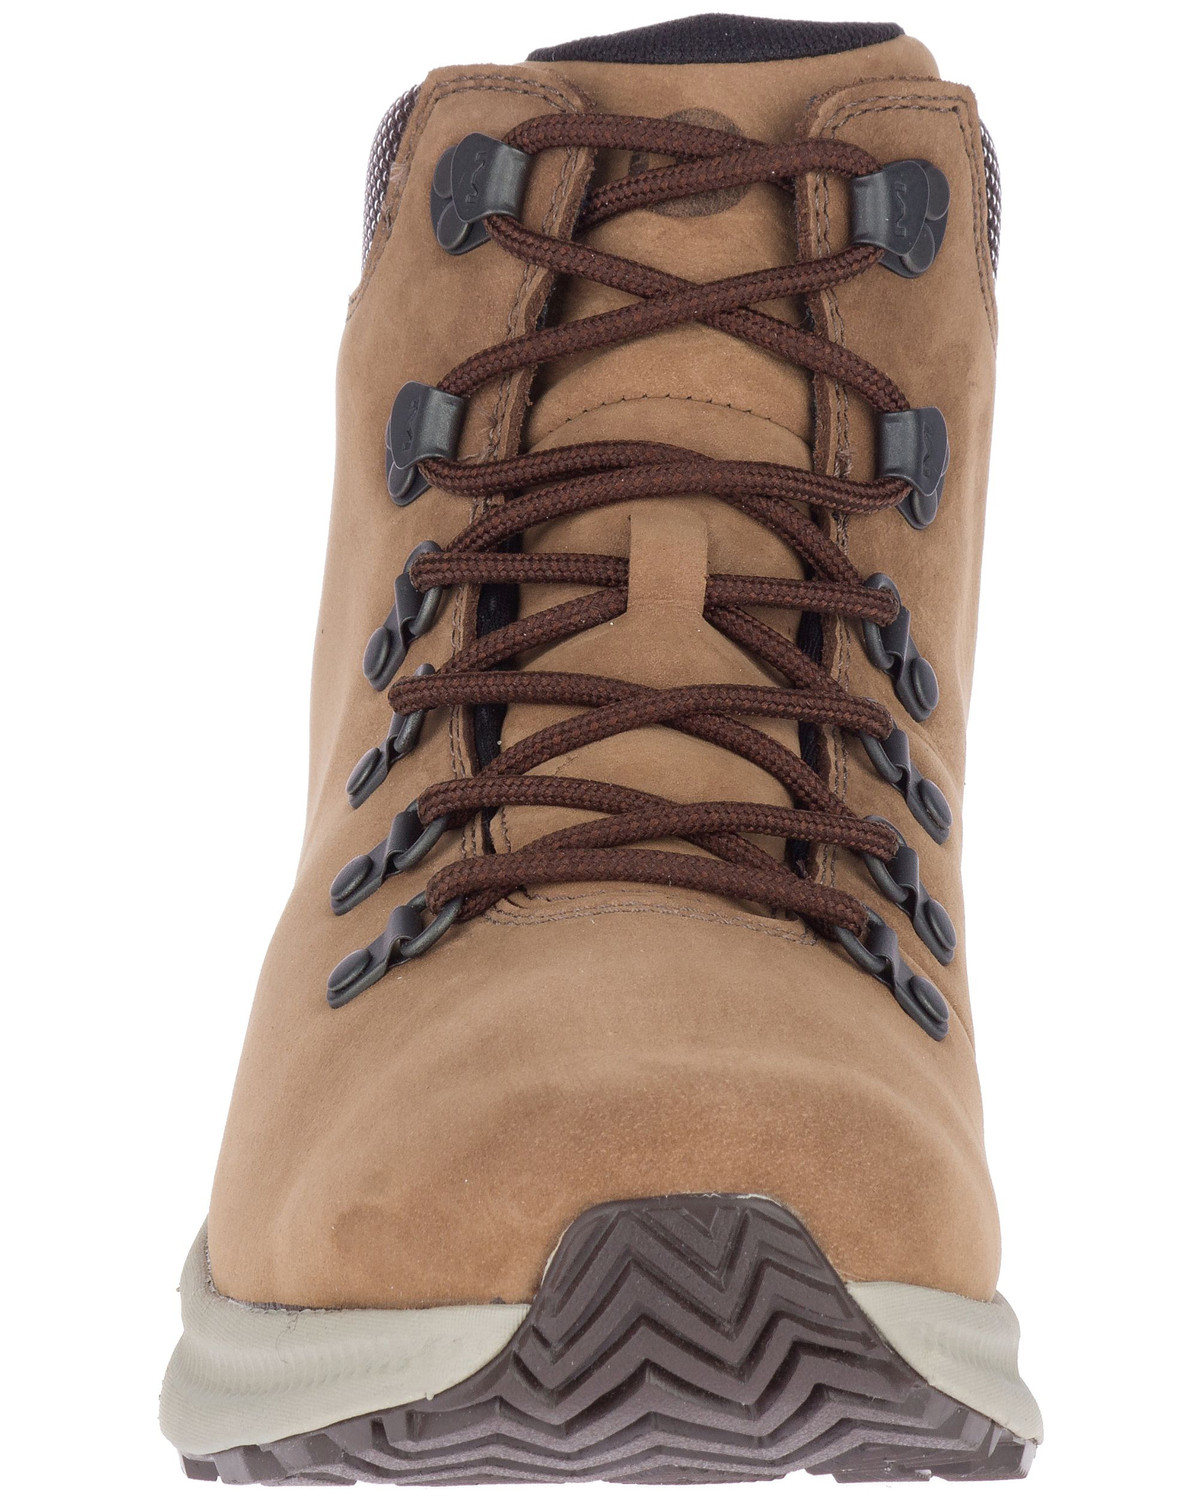 Merrell Men's Ontario Waterproof Hiking Boots - Soft Toe - Country ...